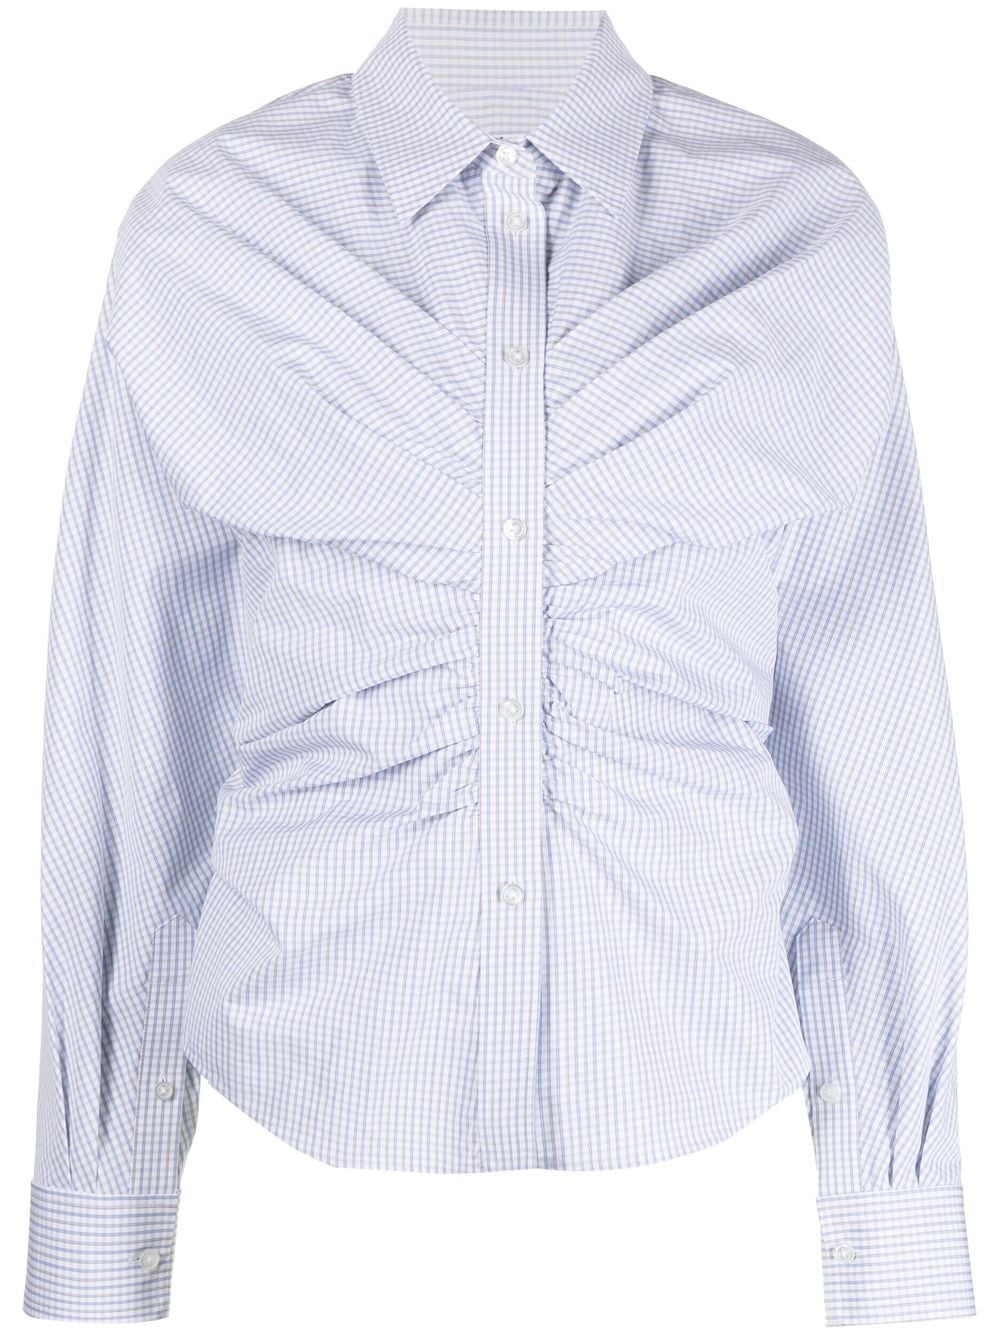 Alexander Wang - ruched button-up shirt - women - Cotton - 0 - White